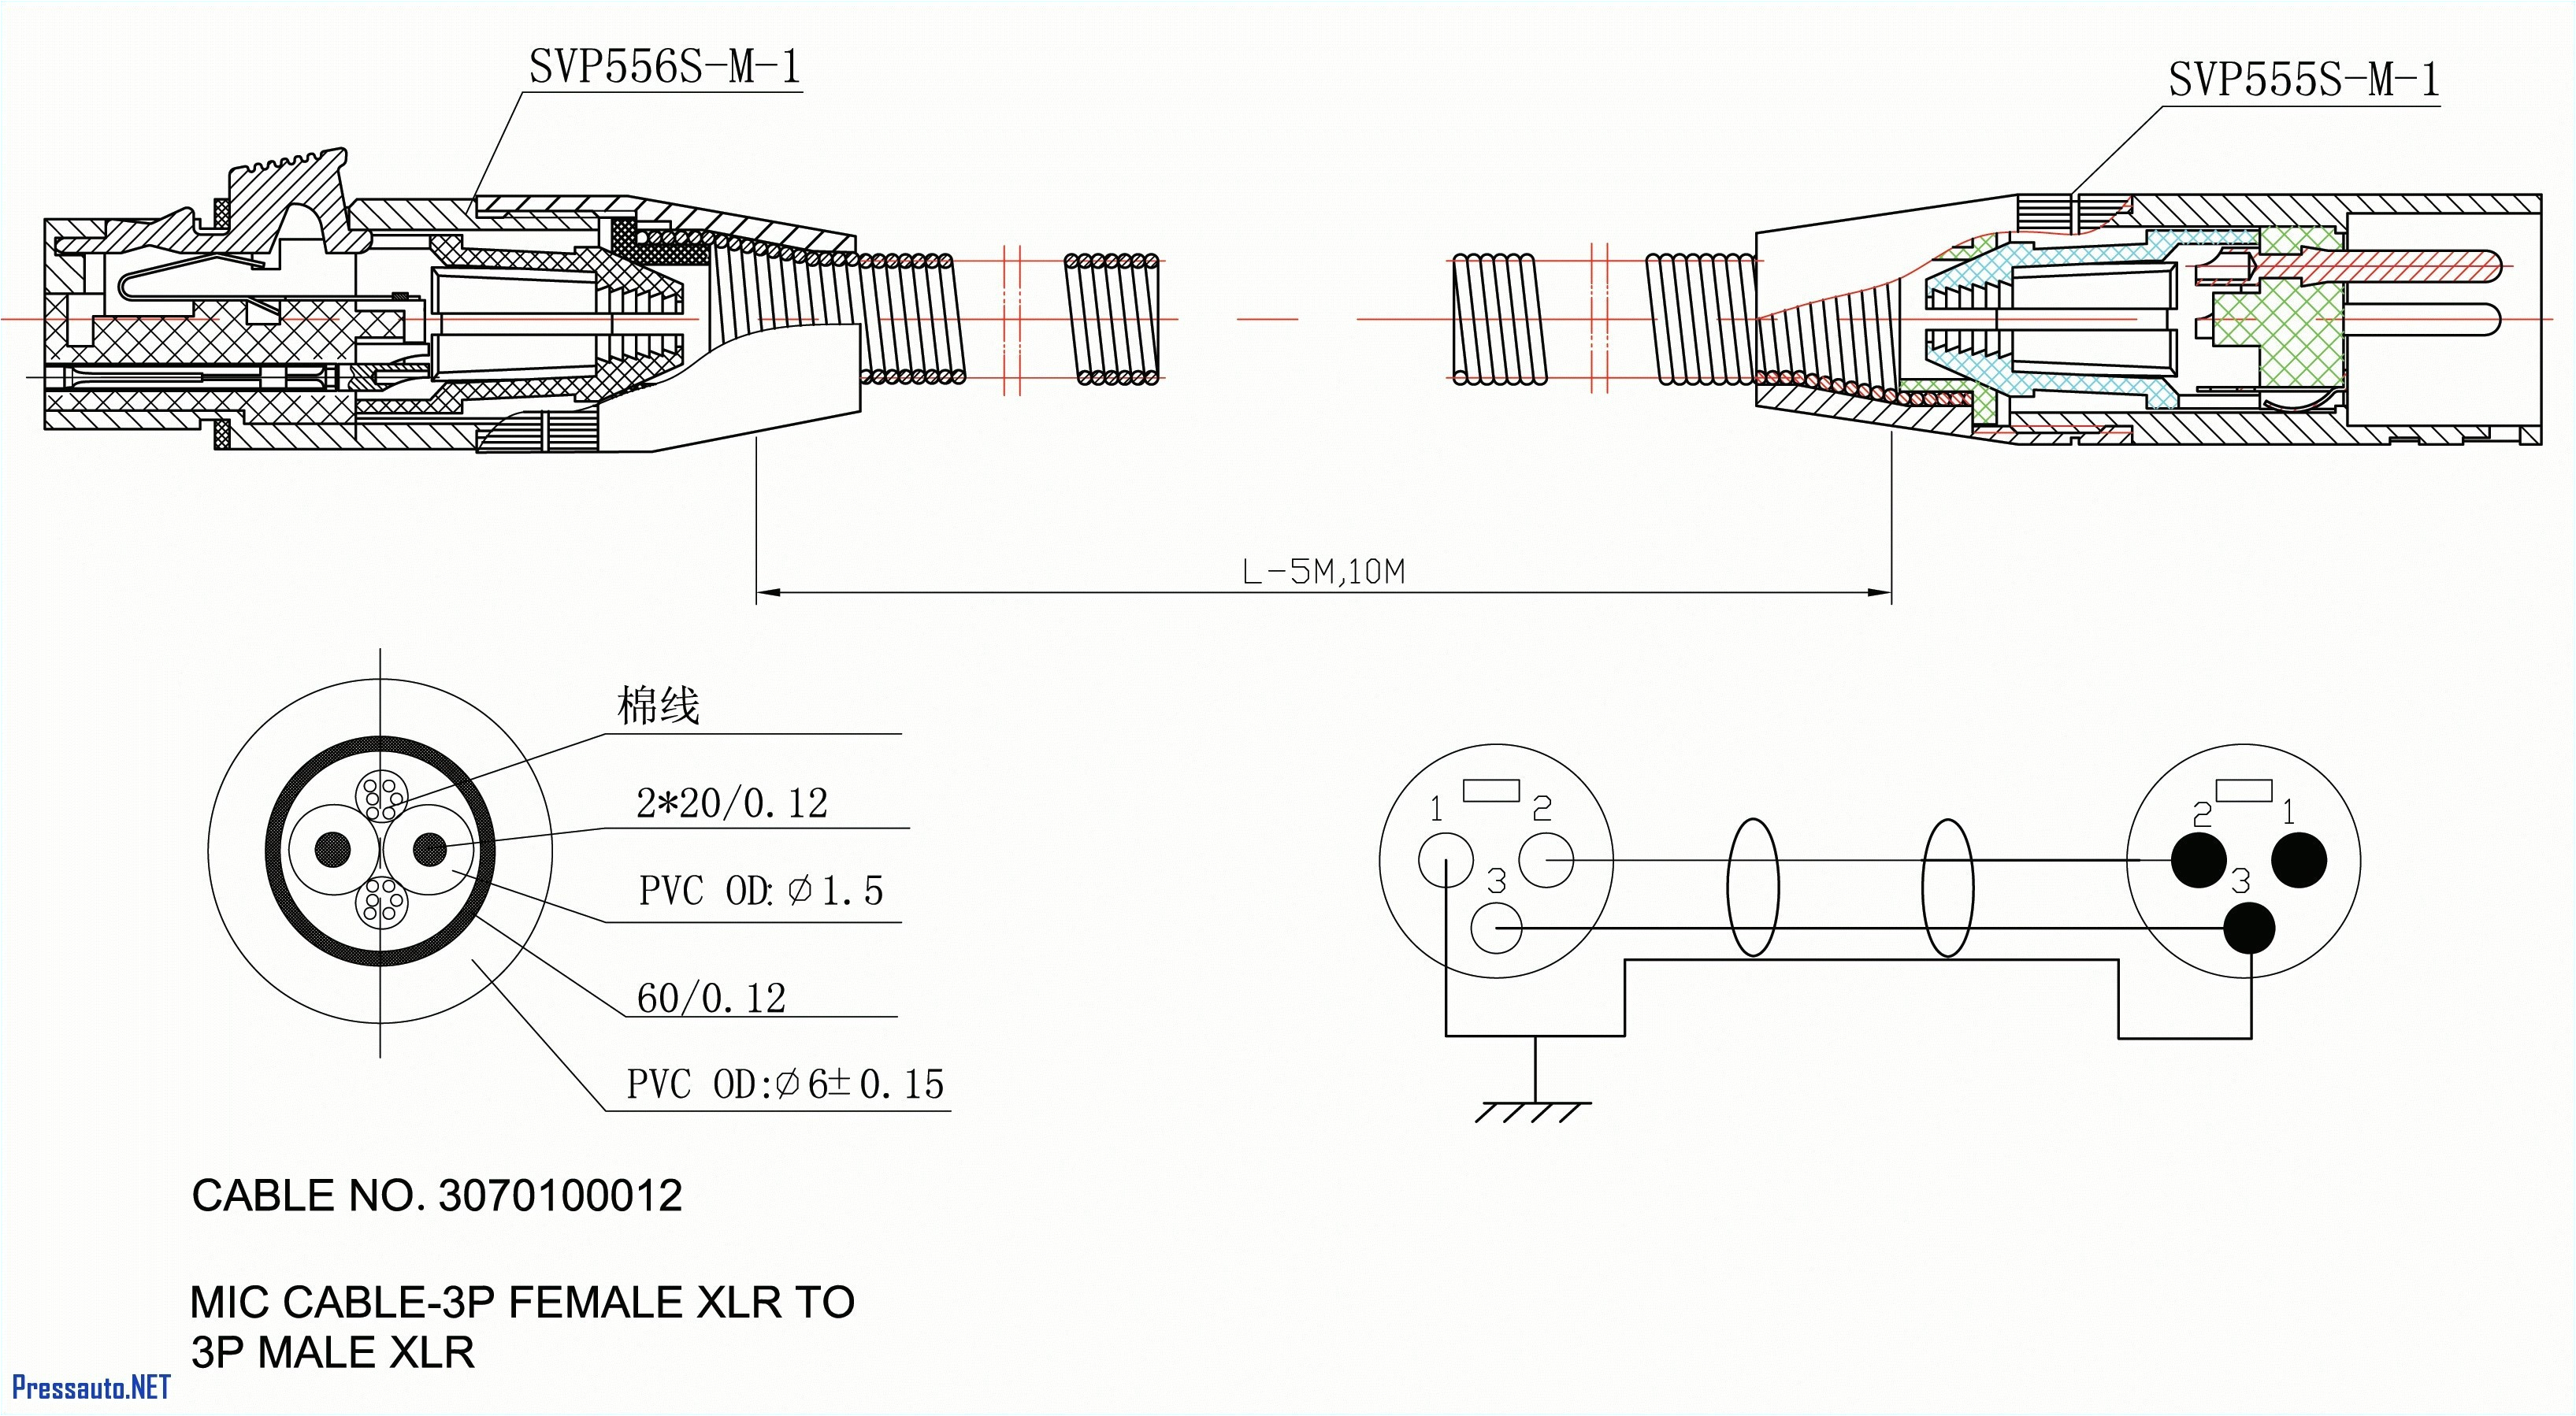 hilux wiring diagram awesome porsche 911 wiring diagram rate hilux ignition switch wiring diagram